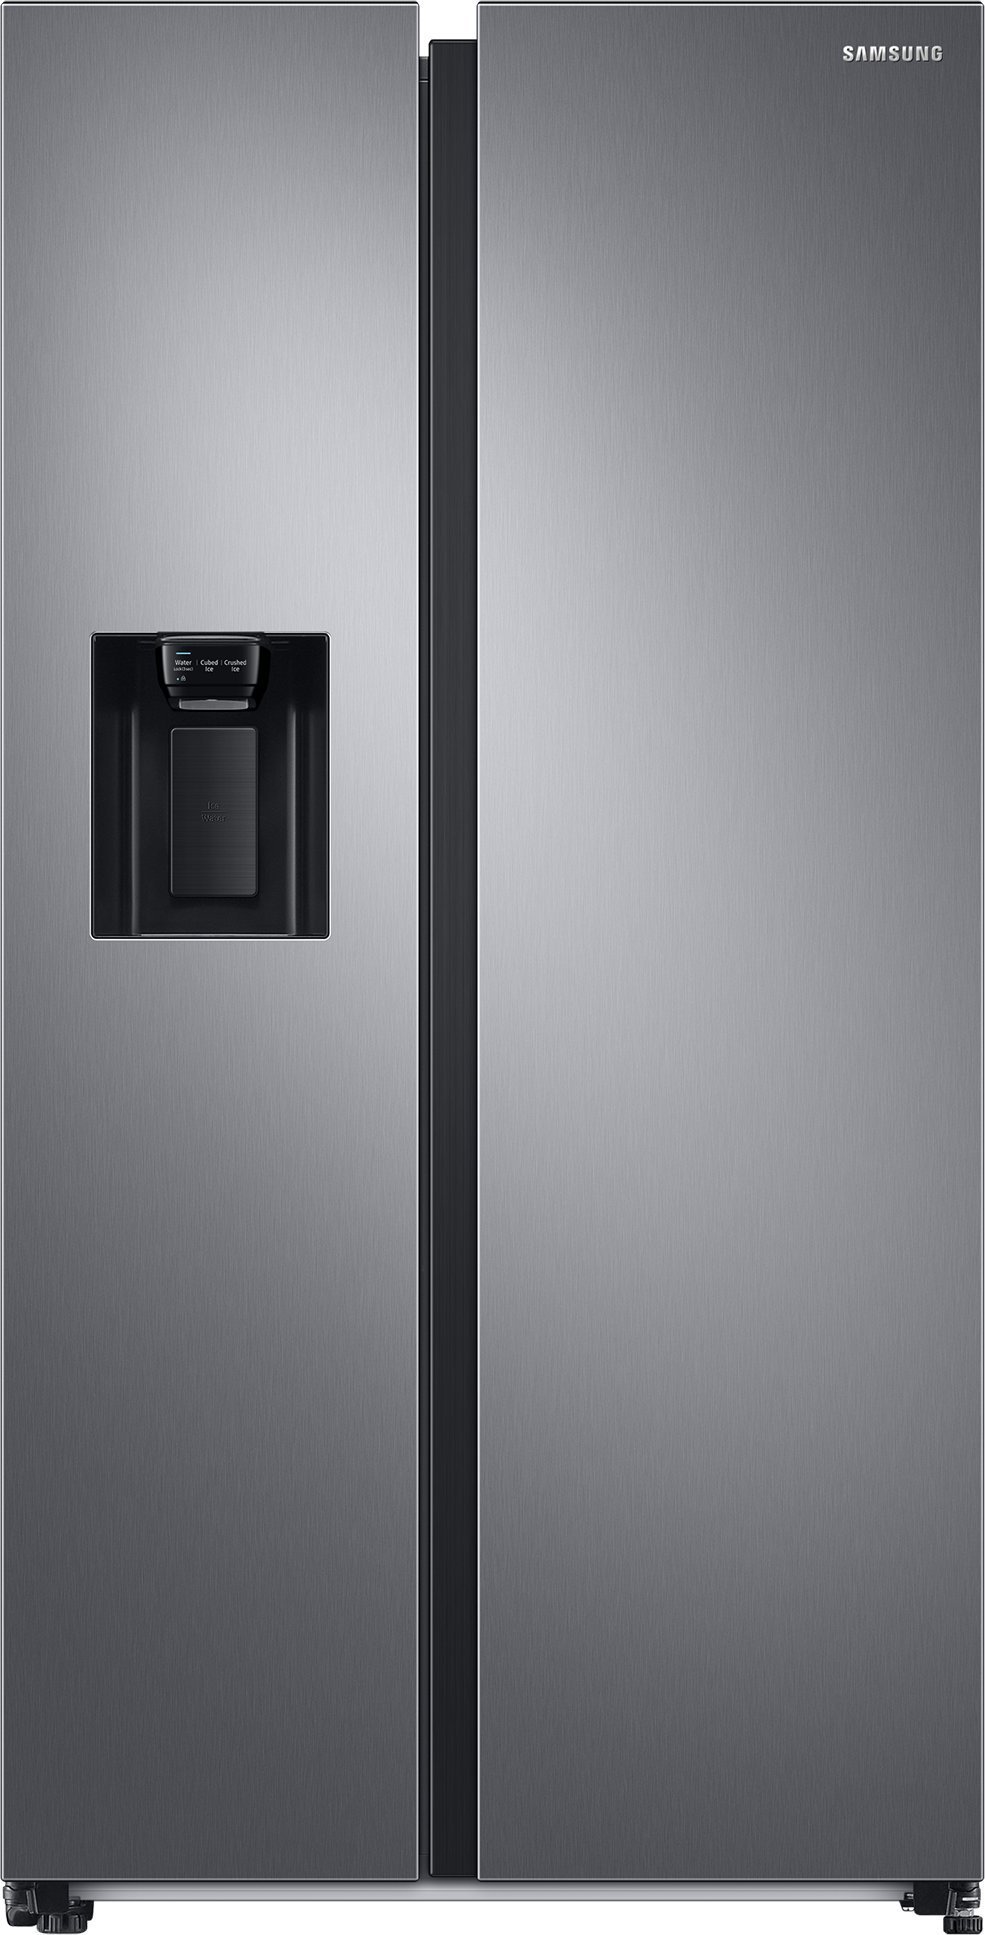 Combine frigorifice - Combina frigorifica  Samsung RS68A8840S9,4 rafturi,
Argint,
36 dB,
Cu display